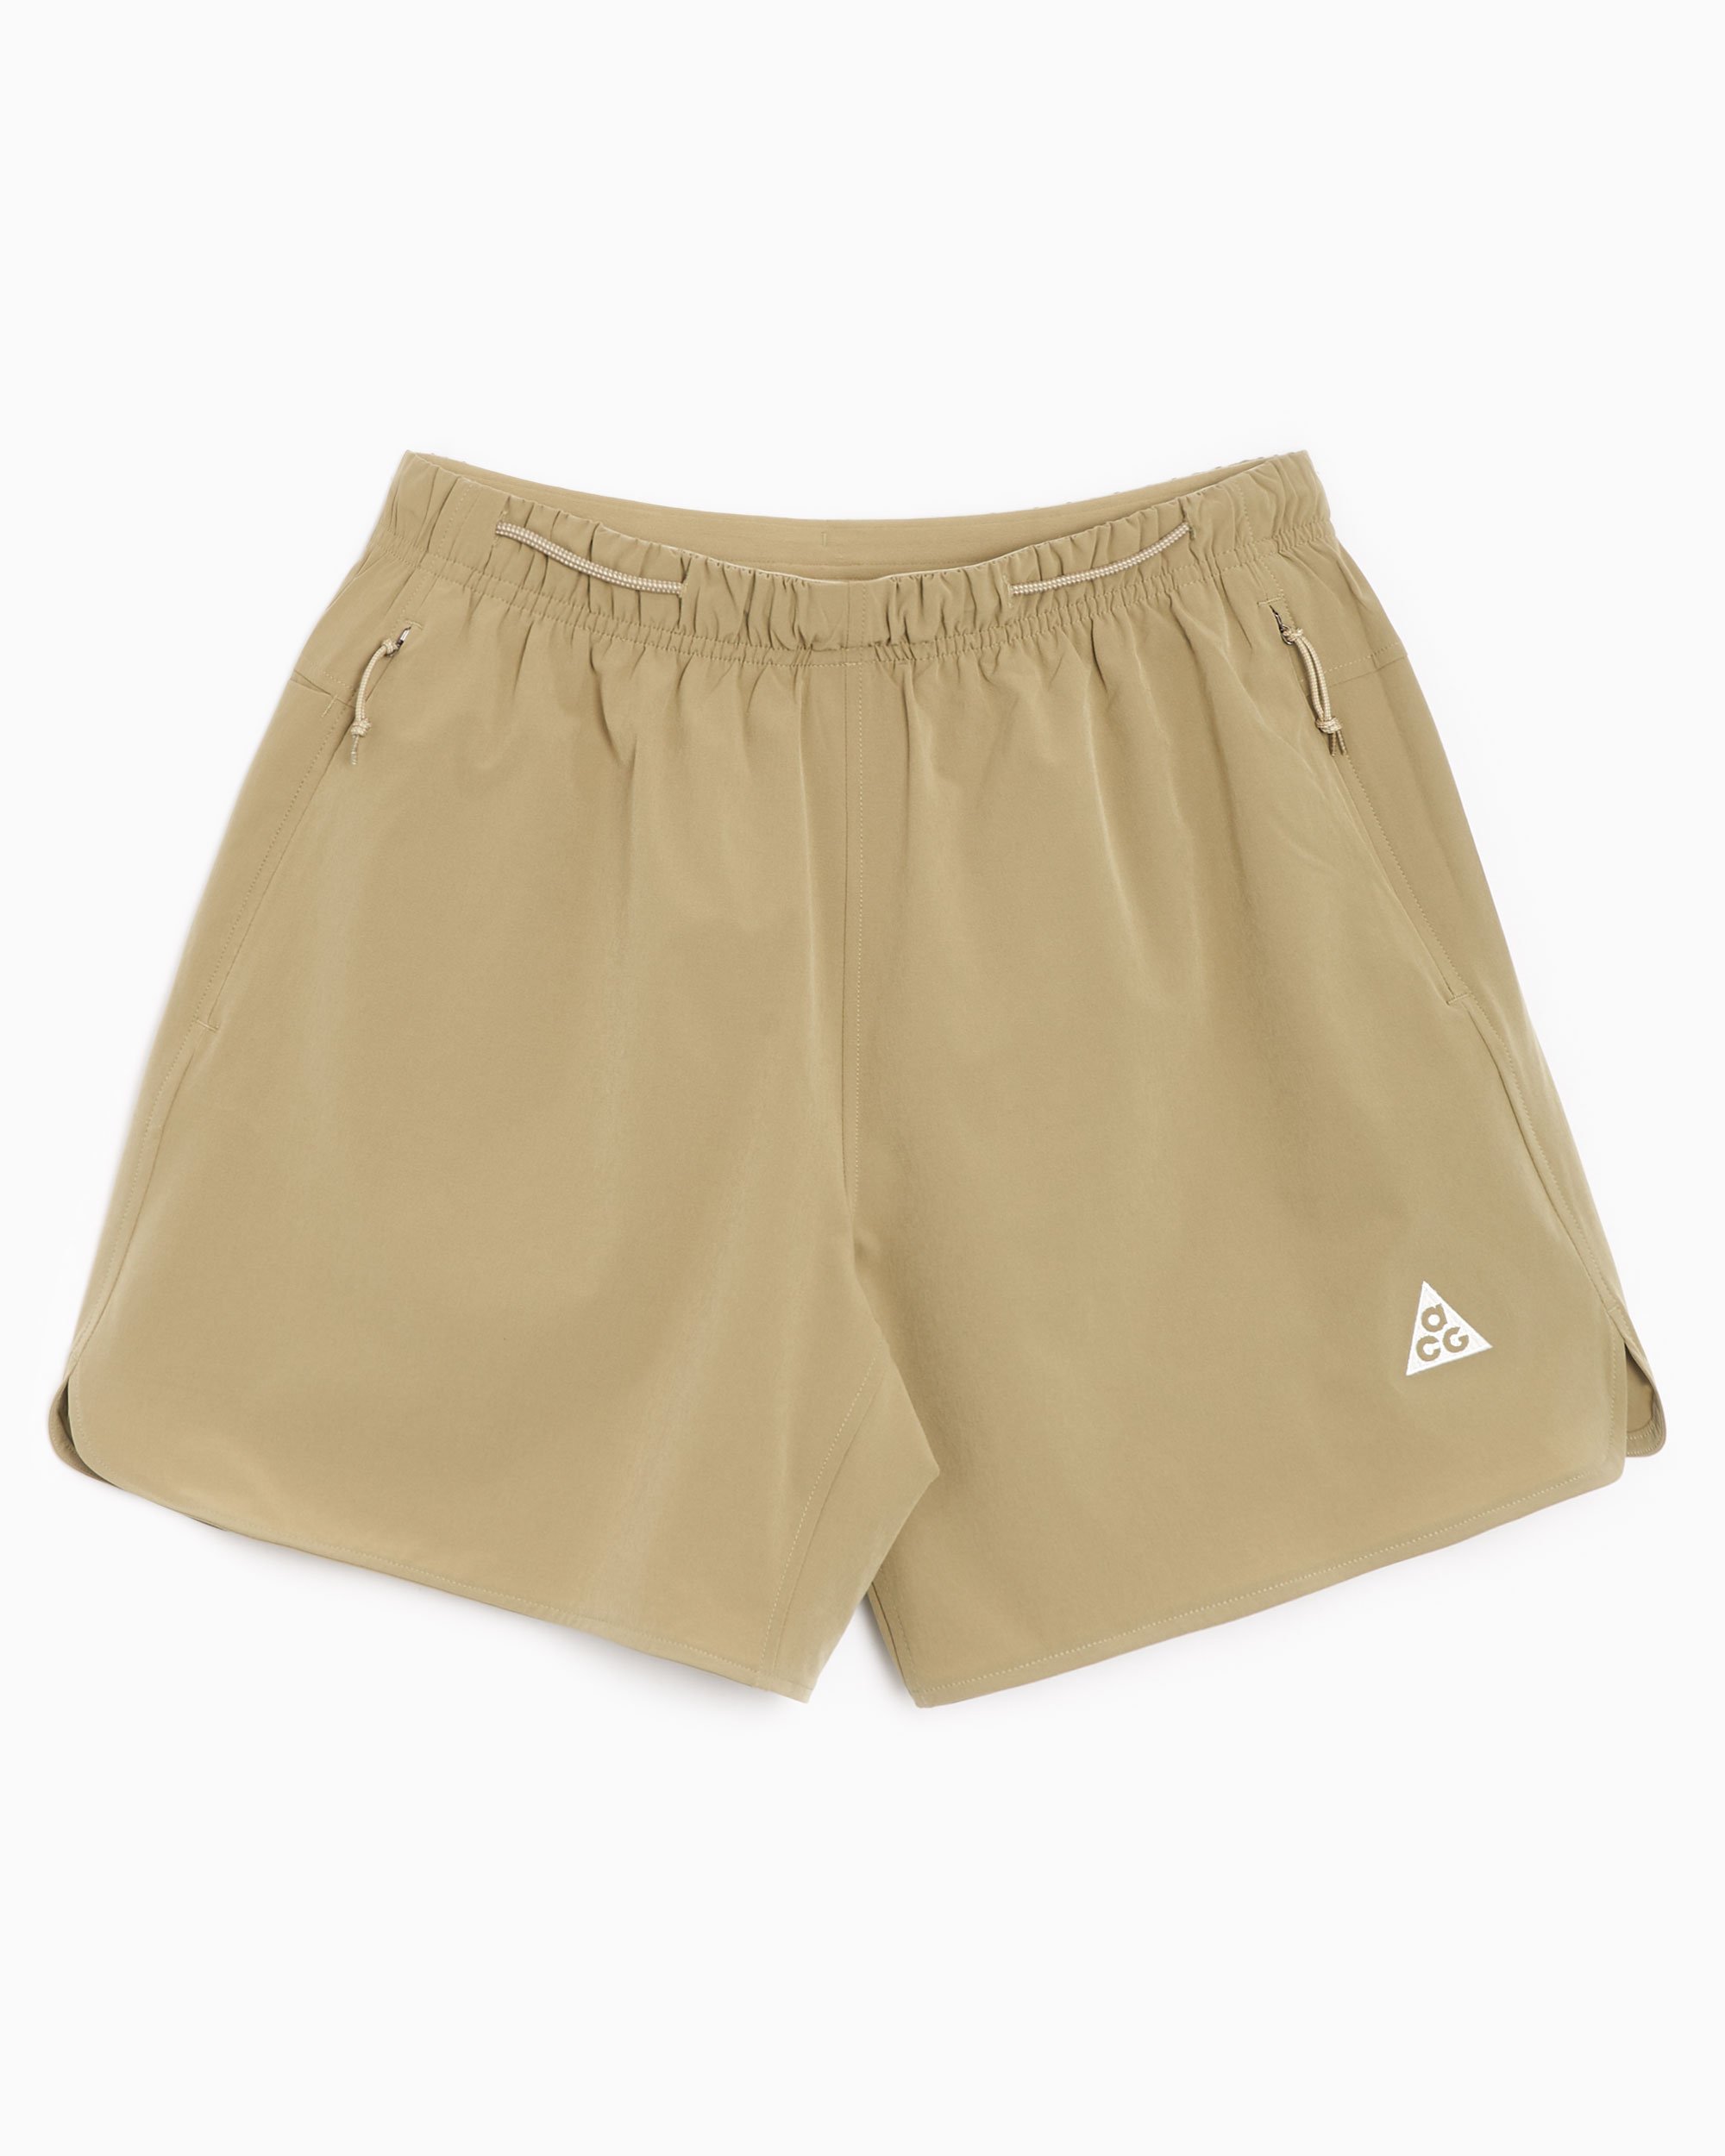 Nike ACG Dri-FIT New Sands Men's Shorts Beige DN3955-276| Buy